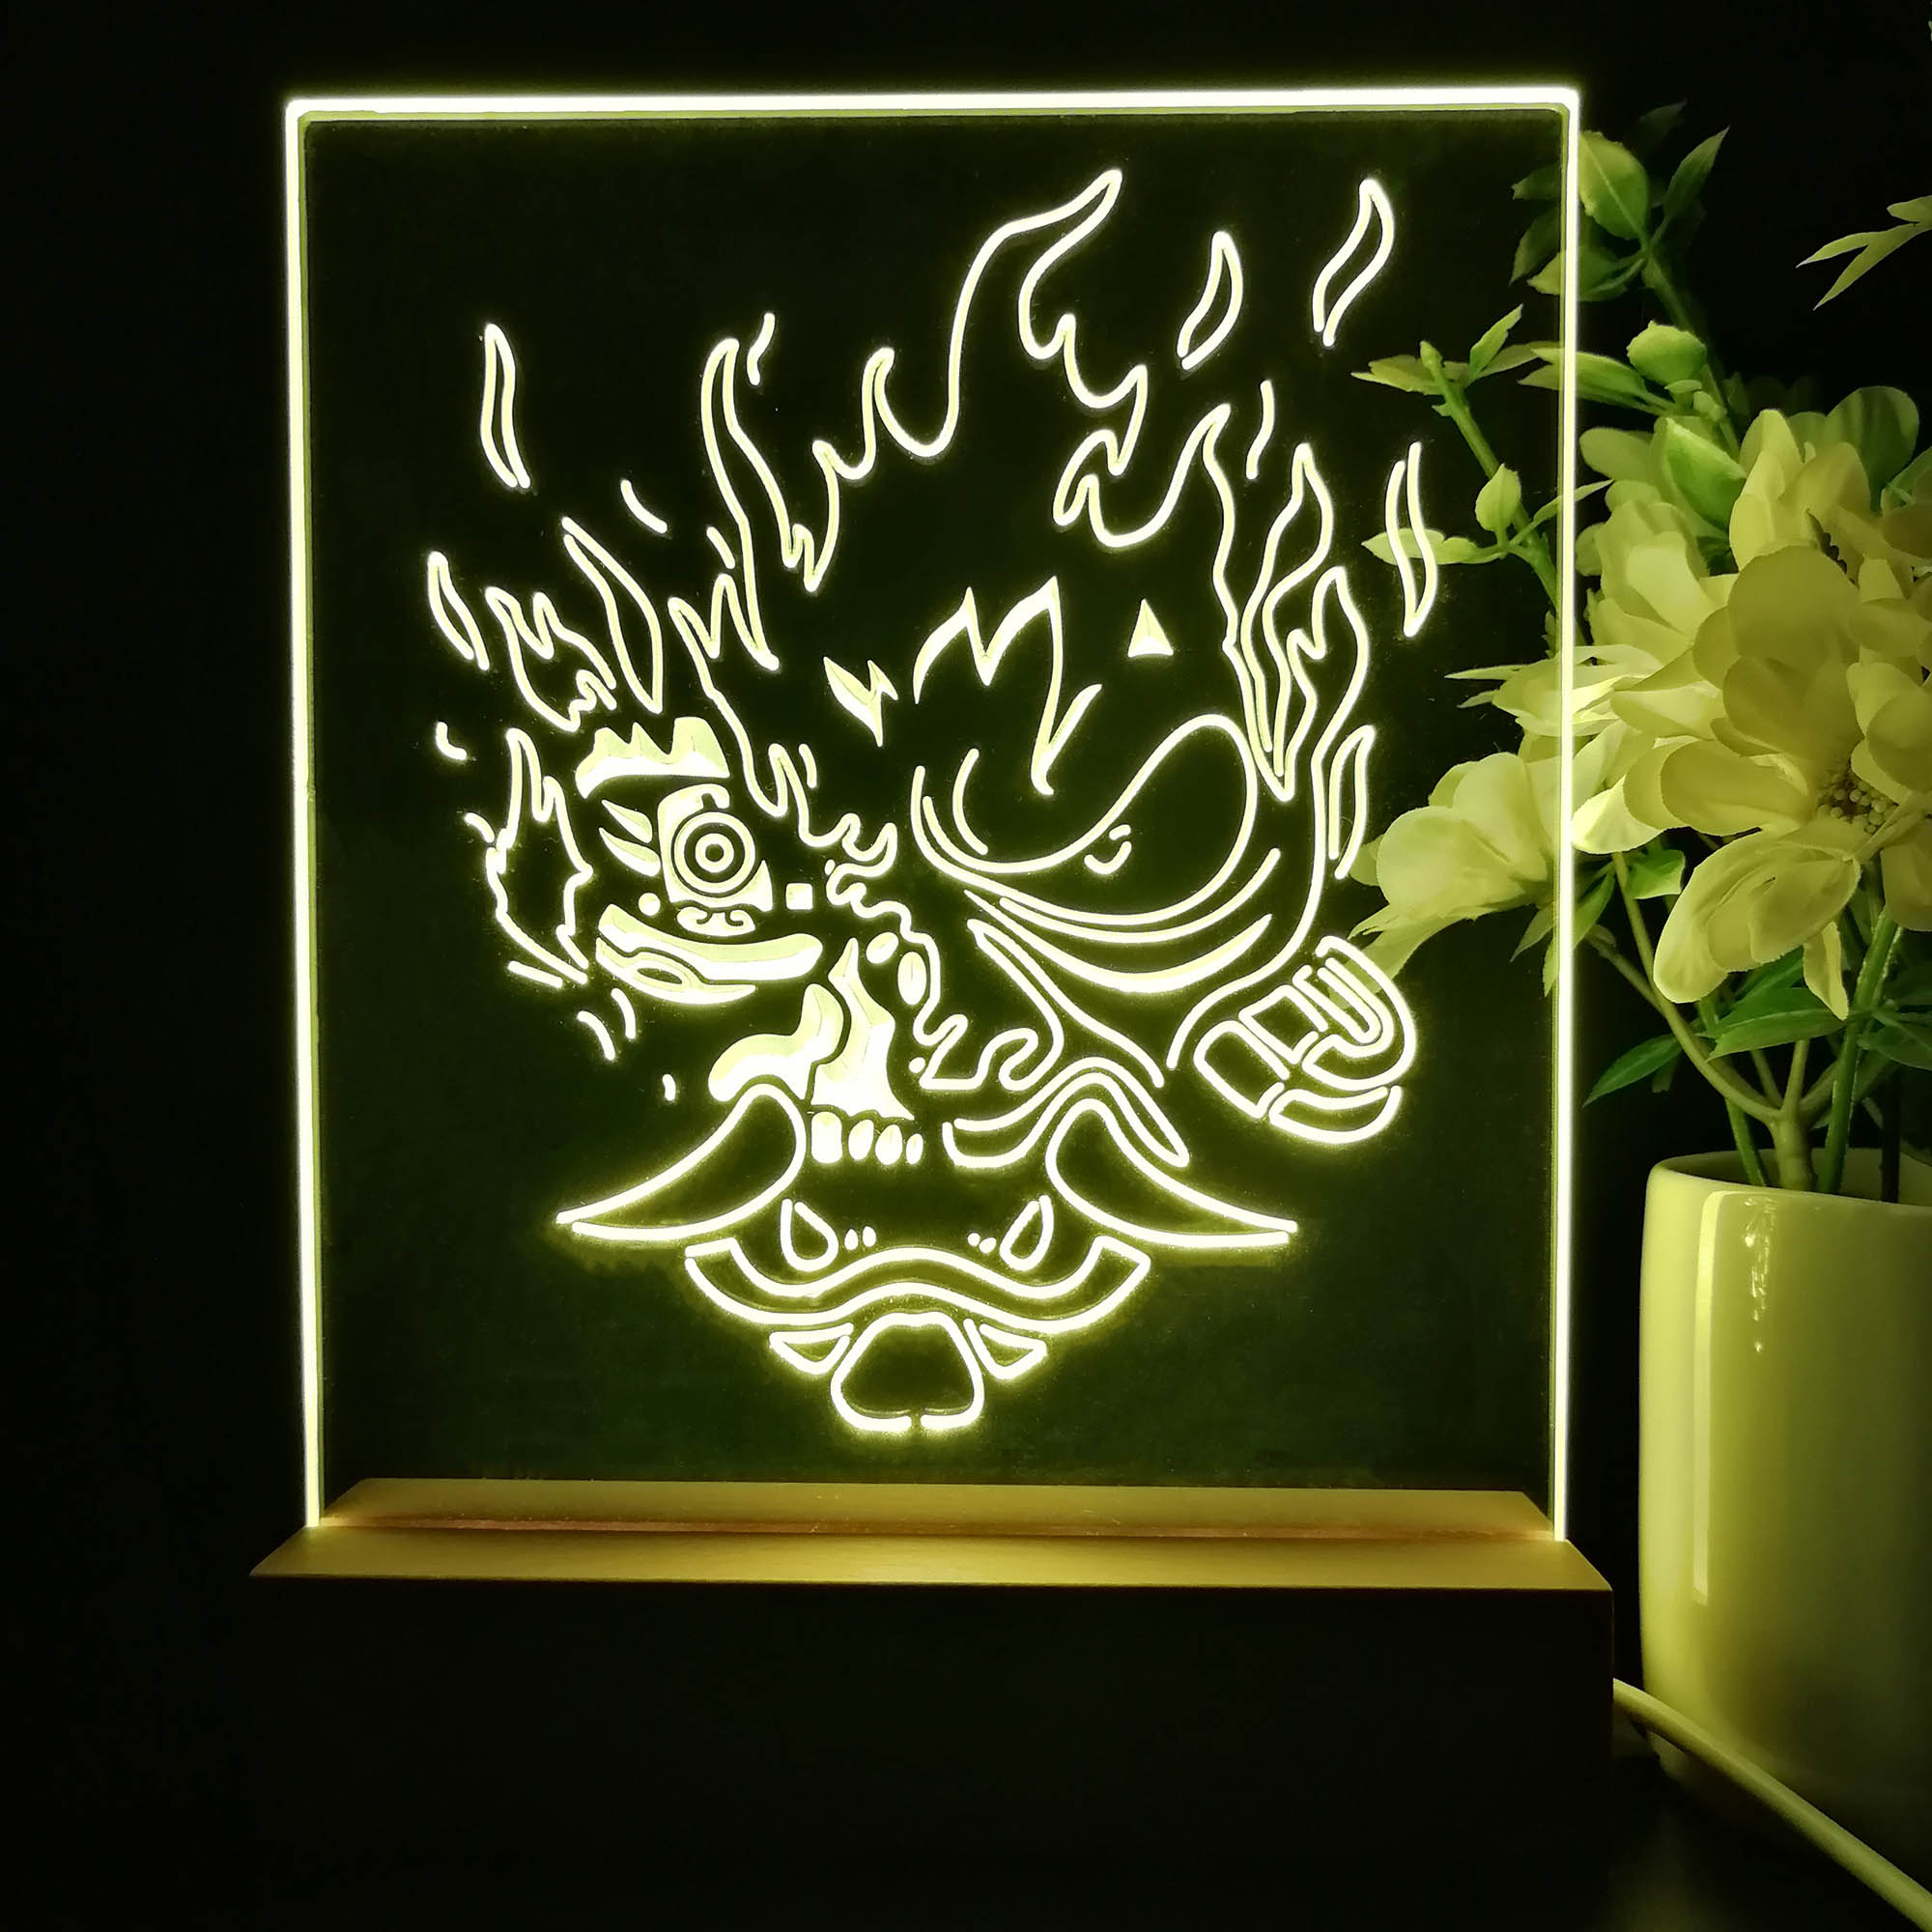 Cyberpunk 2077 Samurai Game Room LED Sign Lamp Display